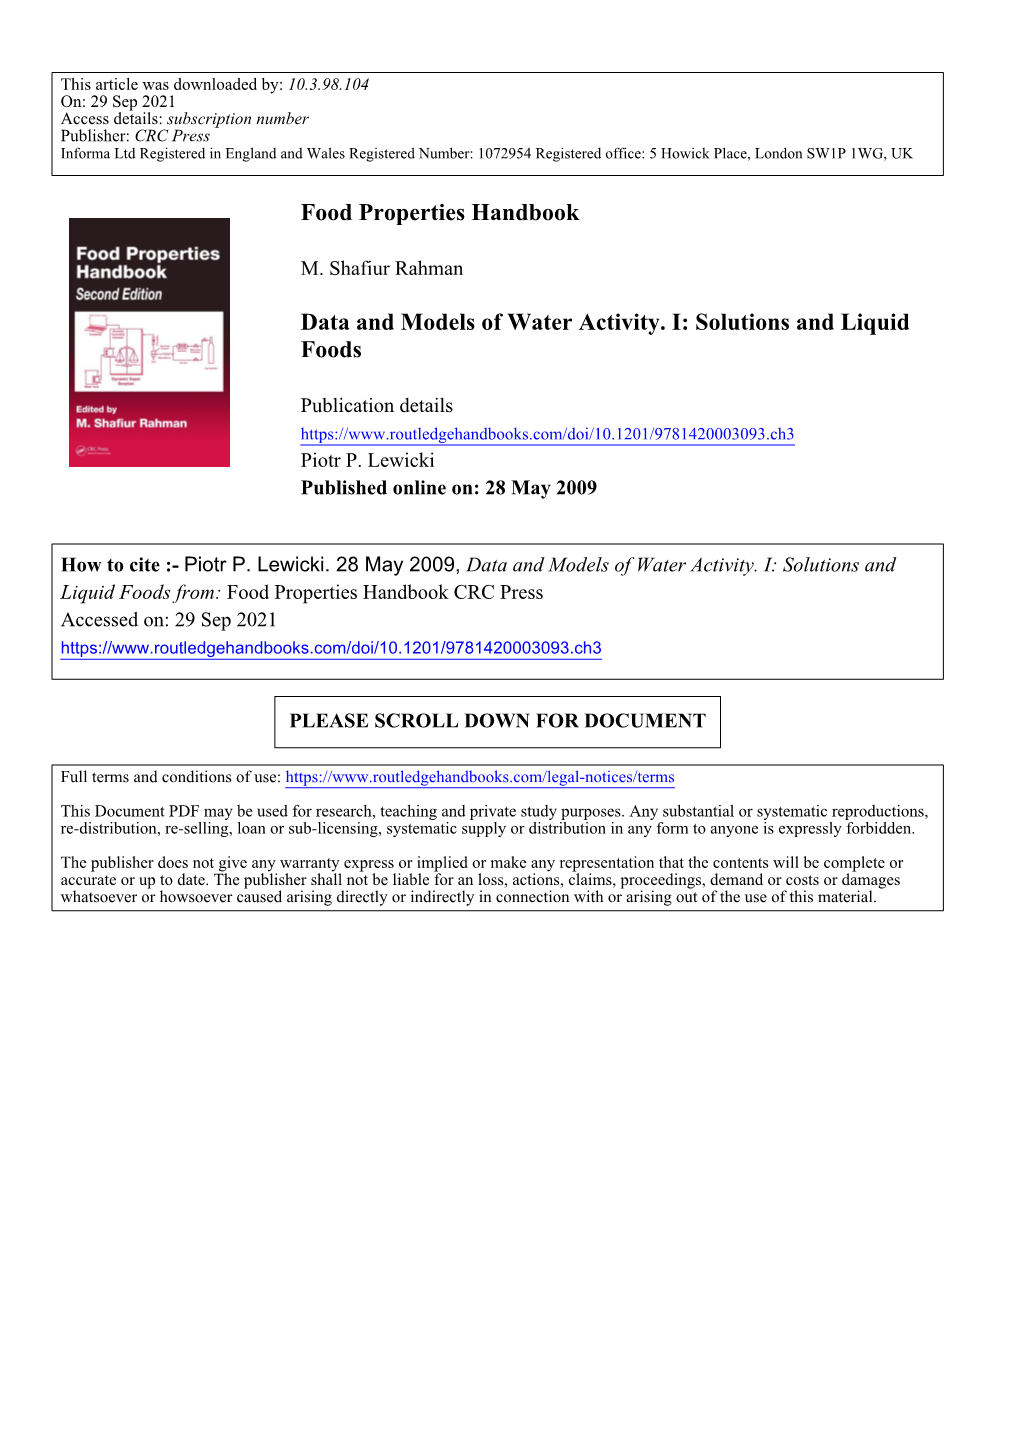 Food Properties Handbook Data and Models of Water Activity. I: Solutions